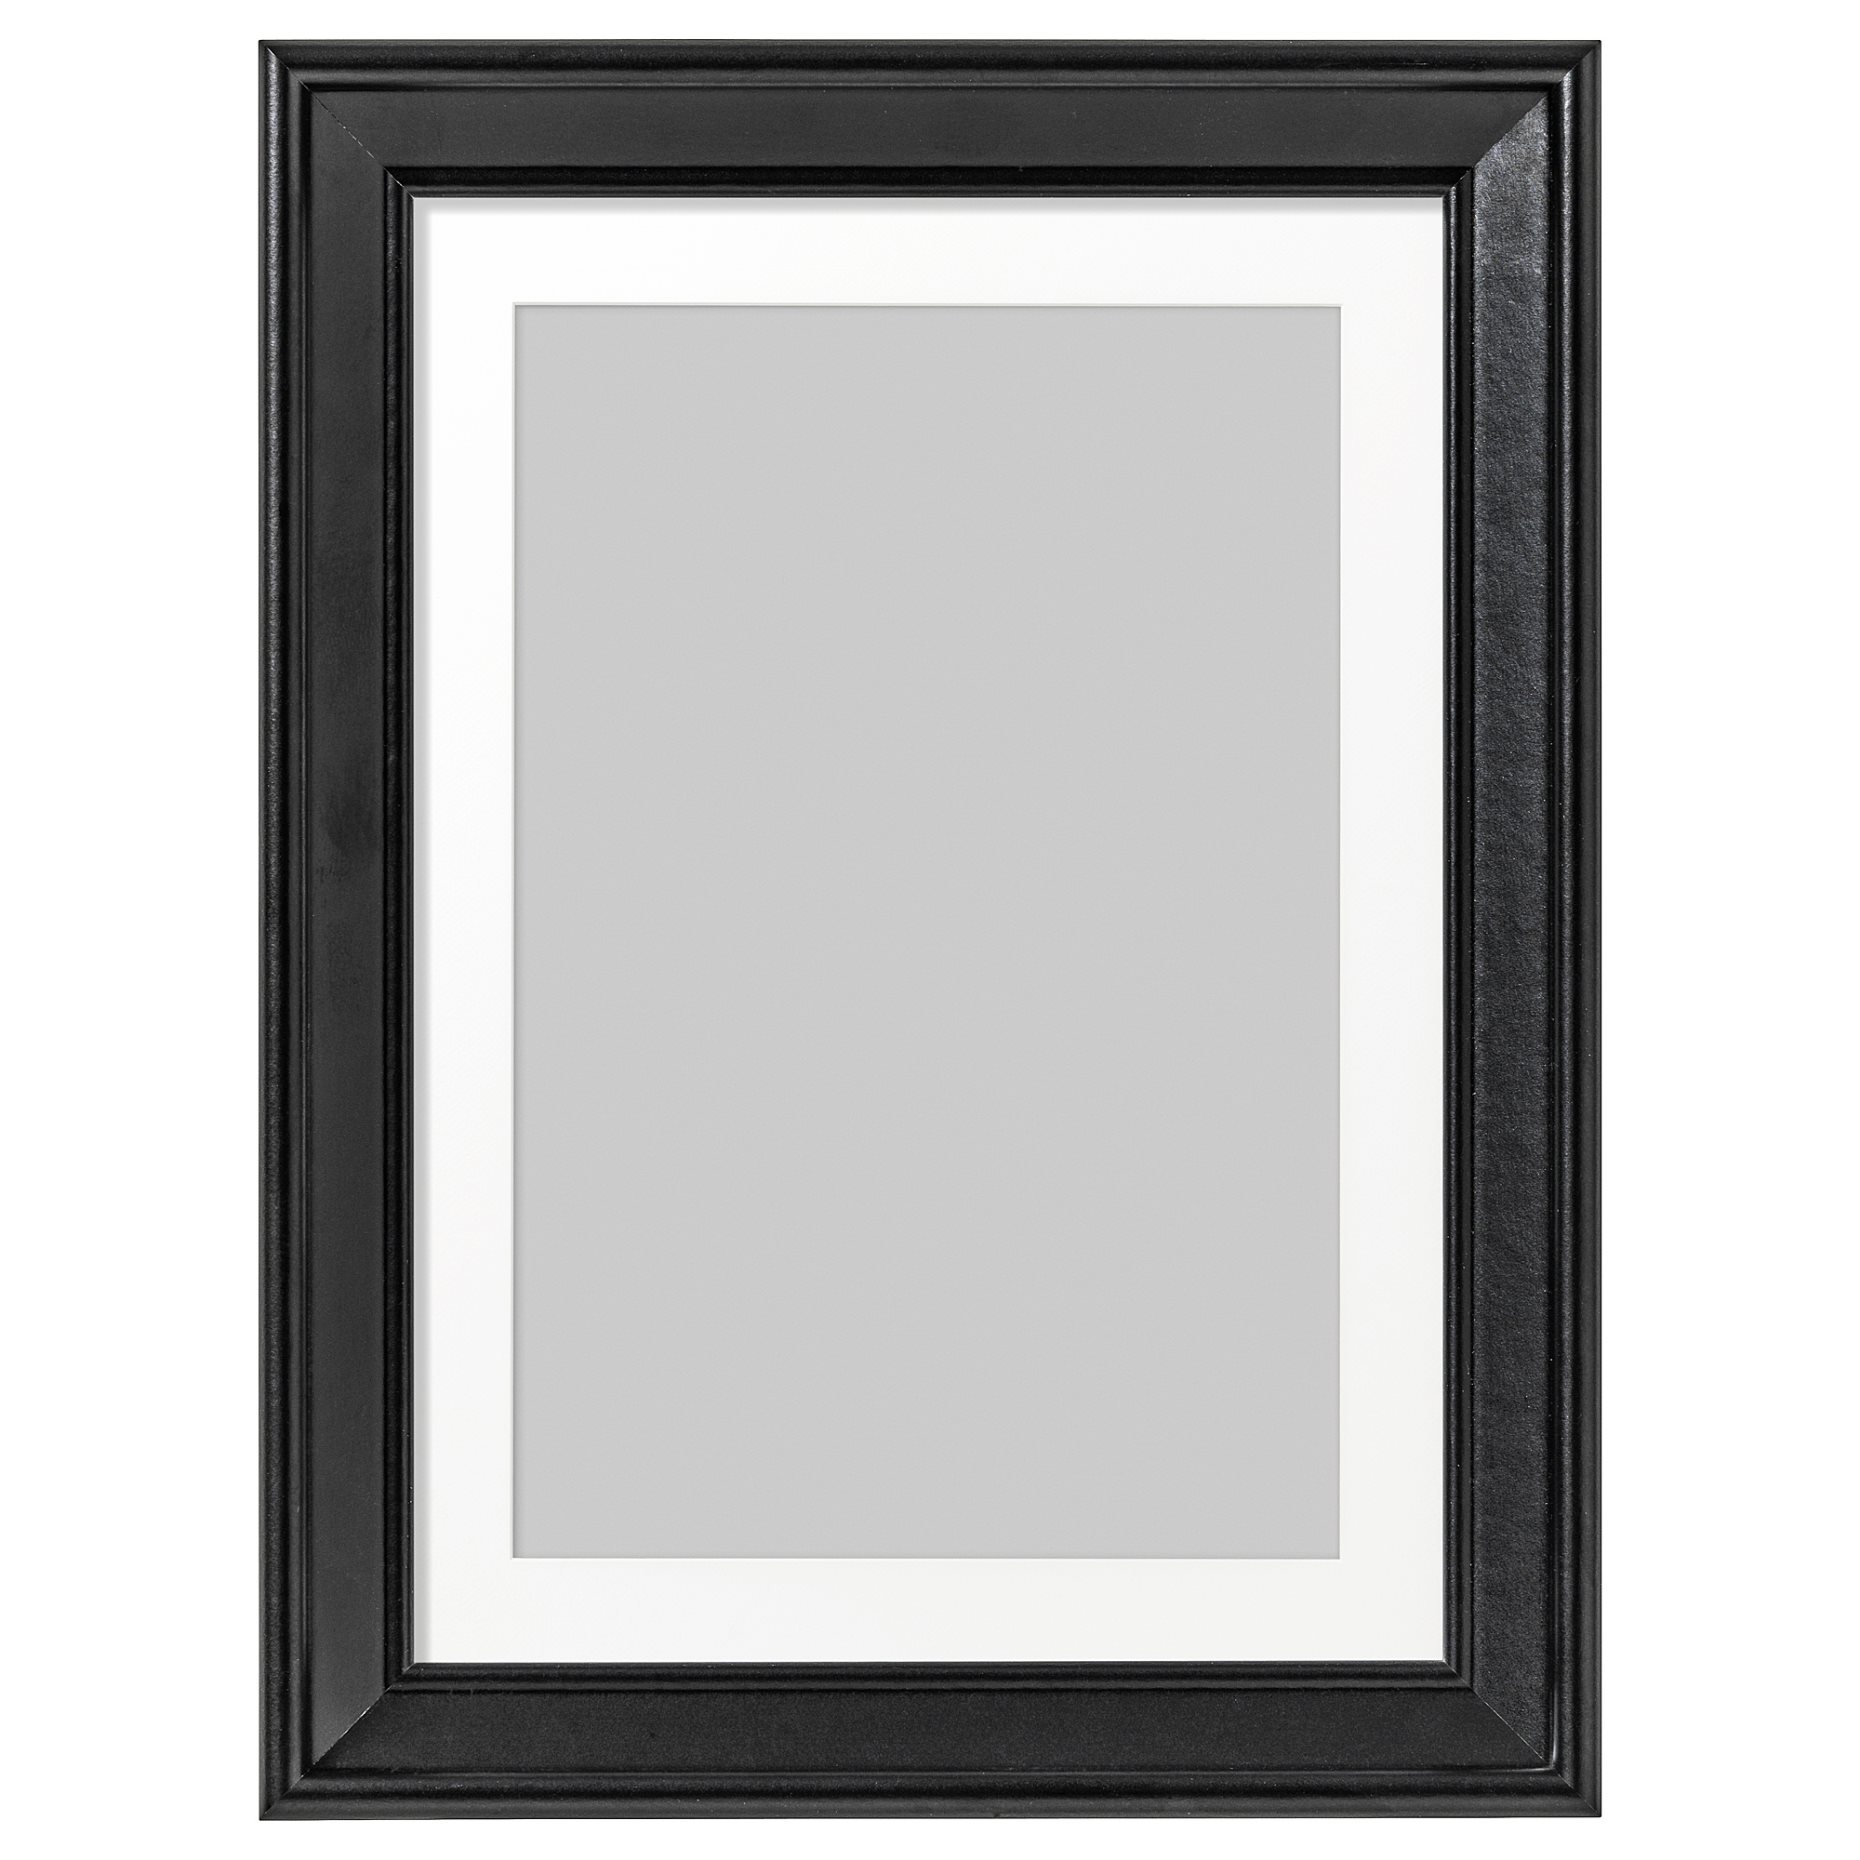 KNOPPÄNG, frame, 13x18 cm, 103.871.24